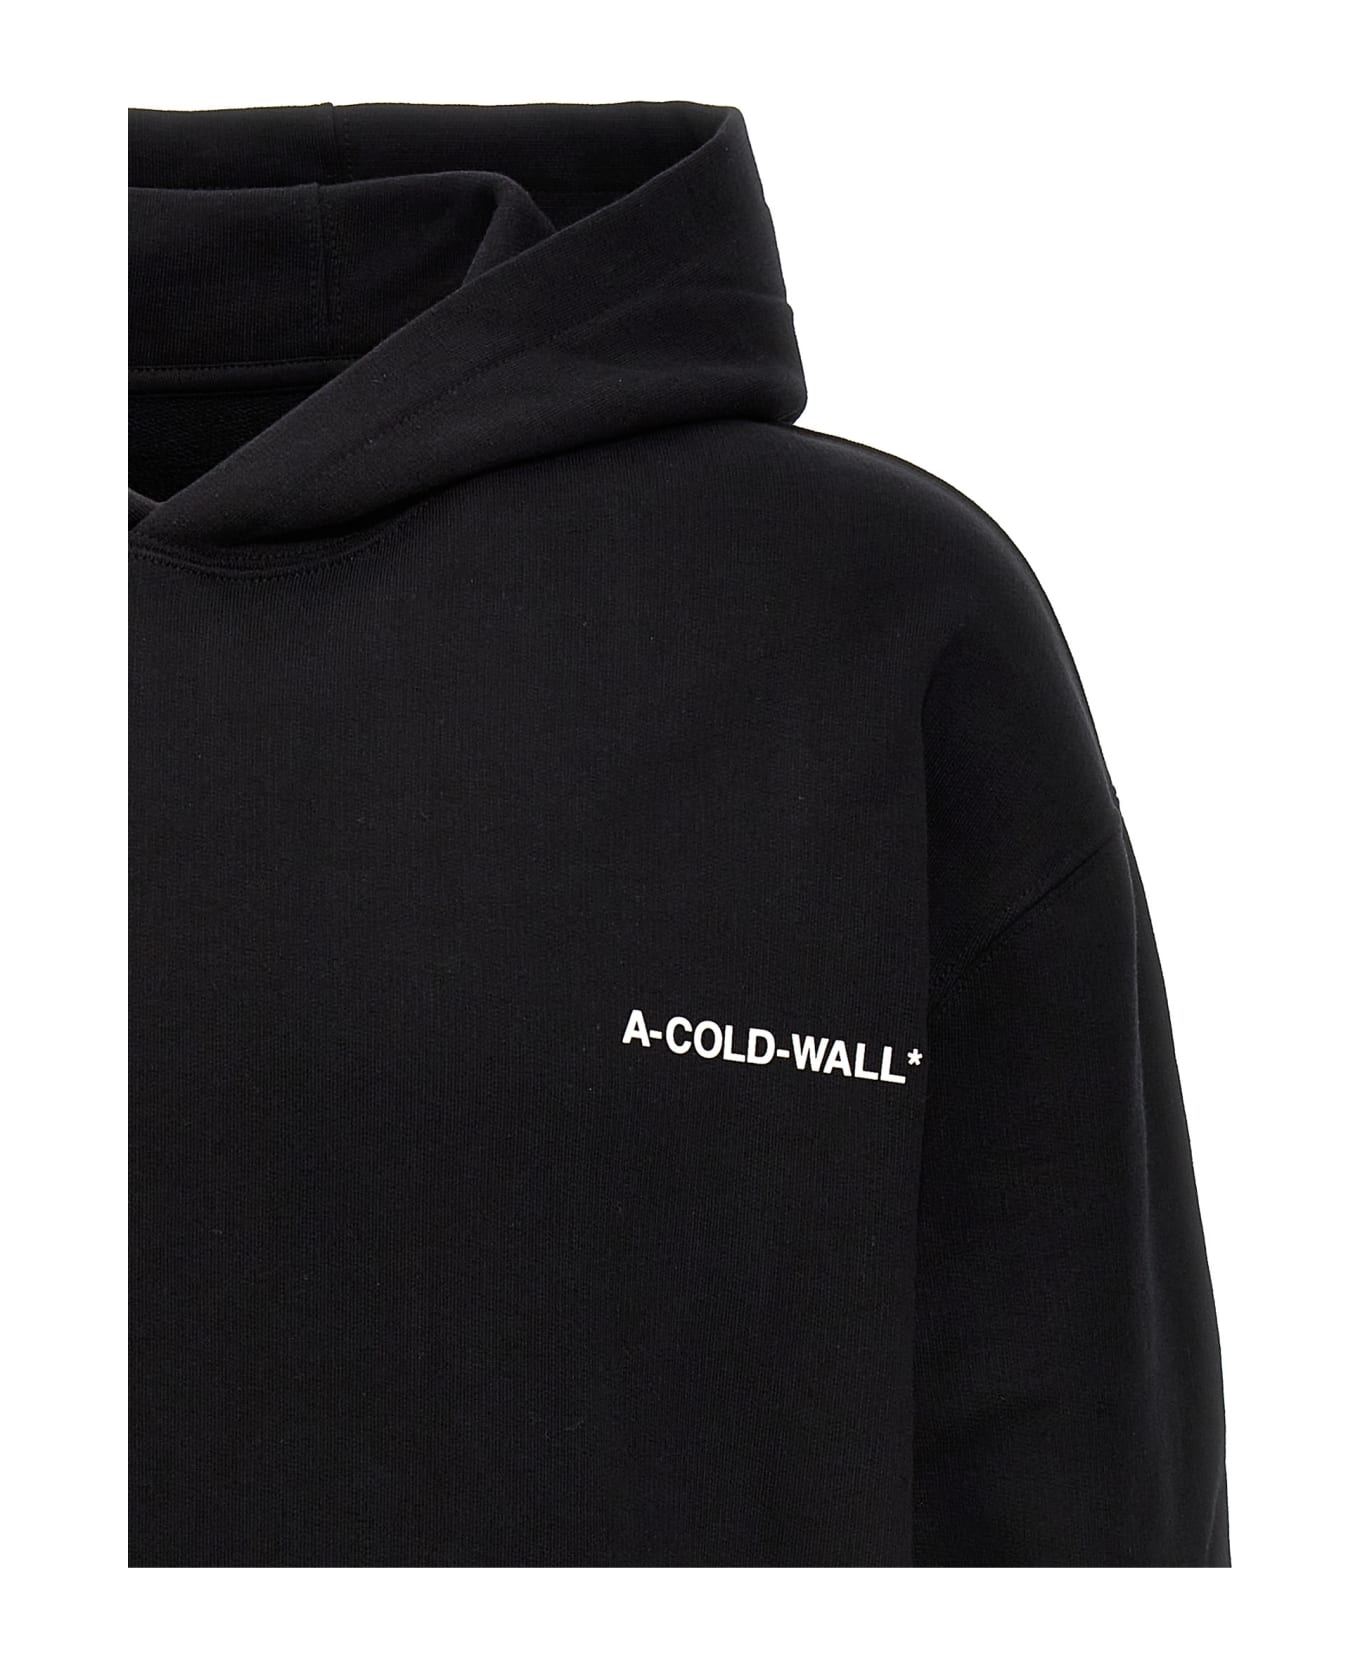 A-COLD-WALL 'essential Small Logo' Hoodie Fleece - BLACK